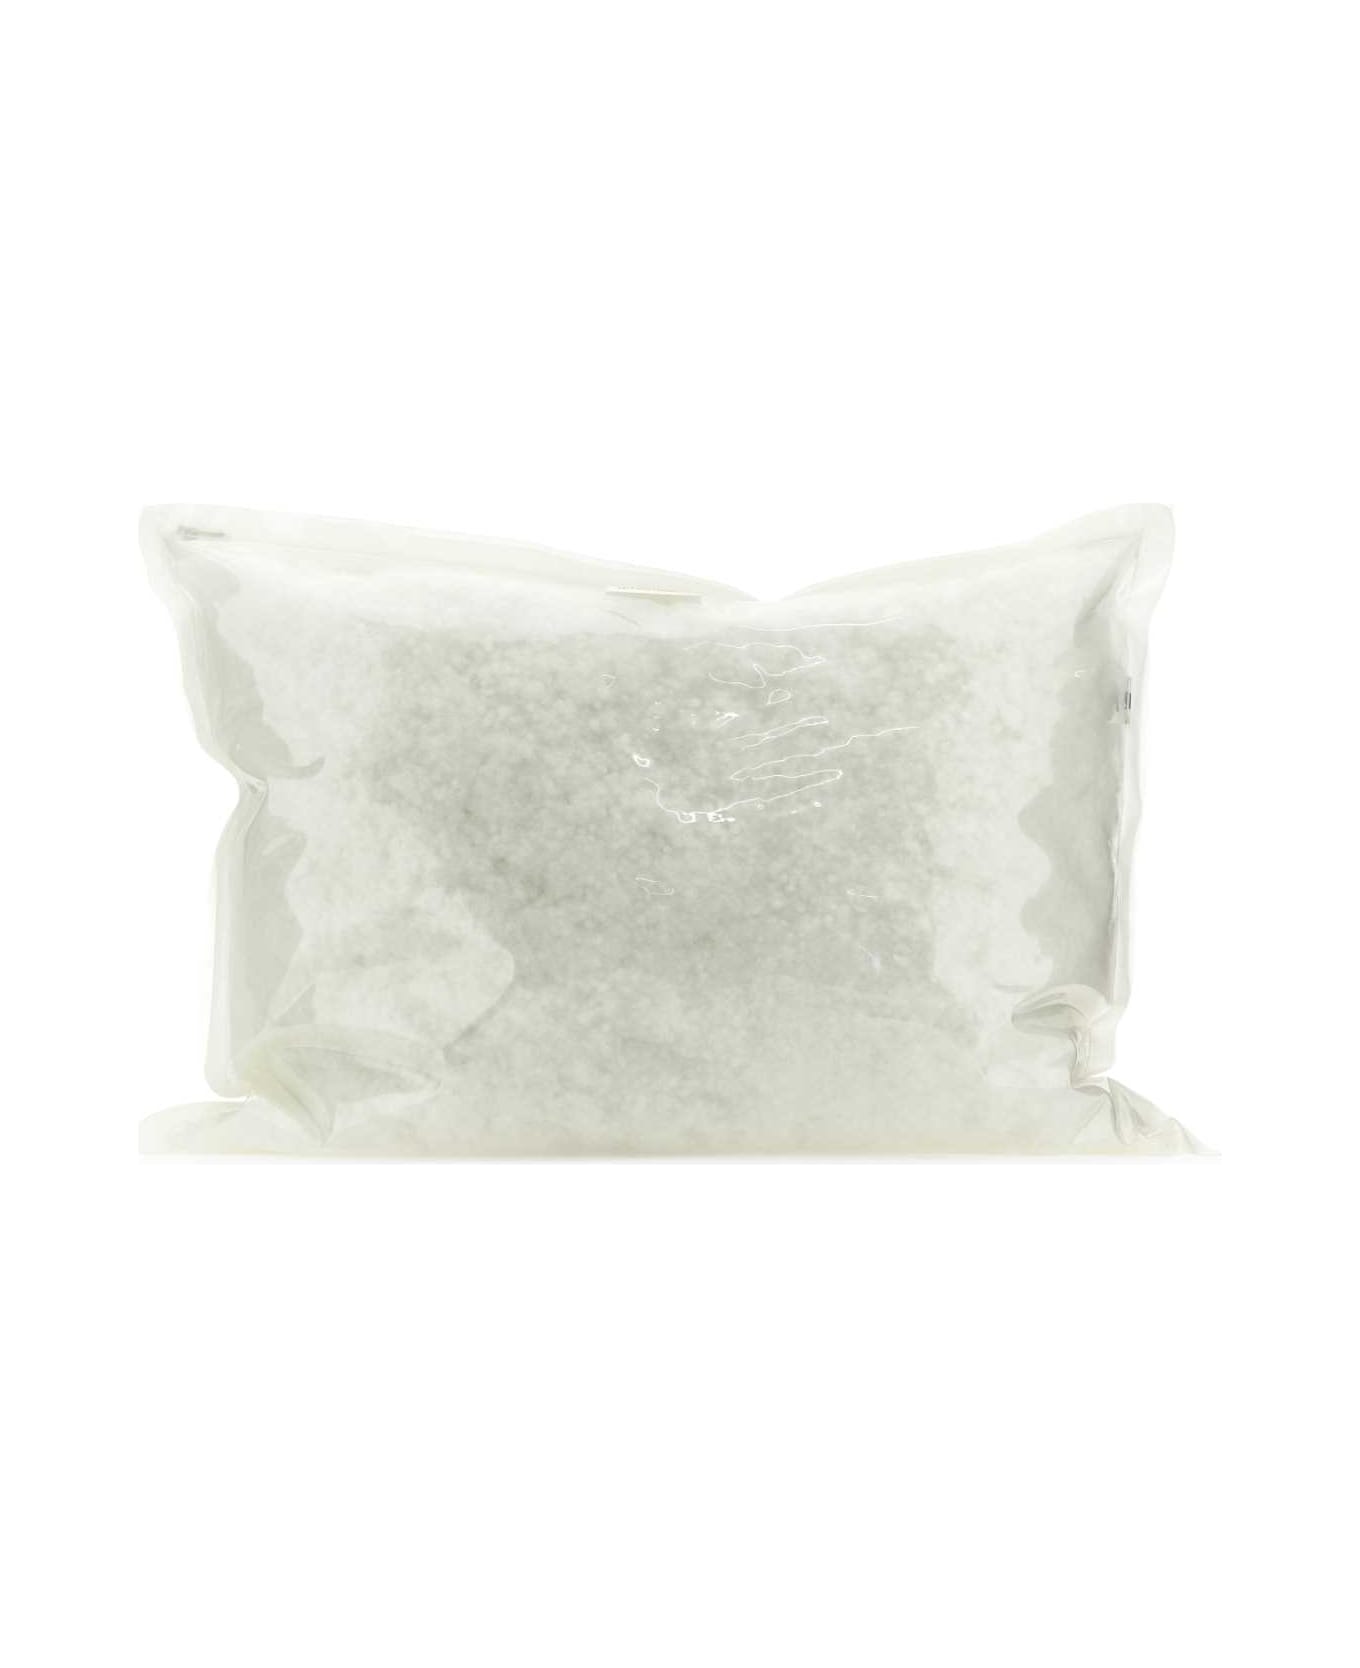 J.W. Anderson White Tpu Large Cushion Clutch - White